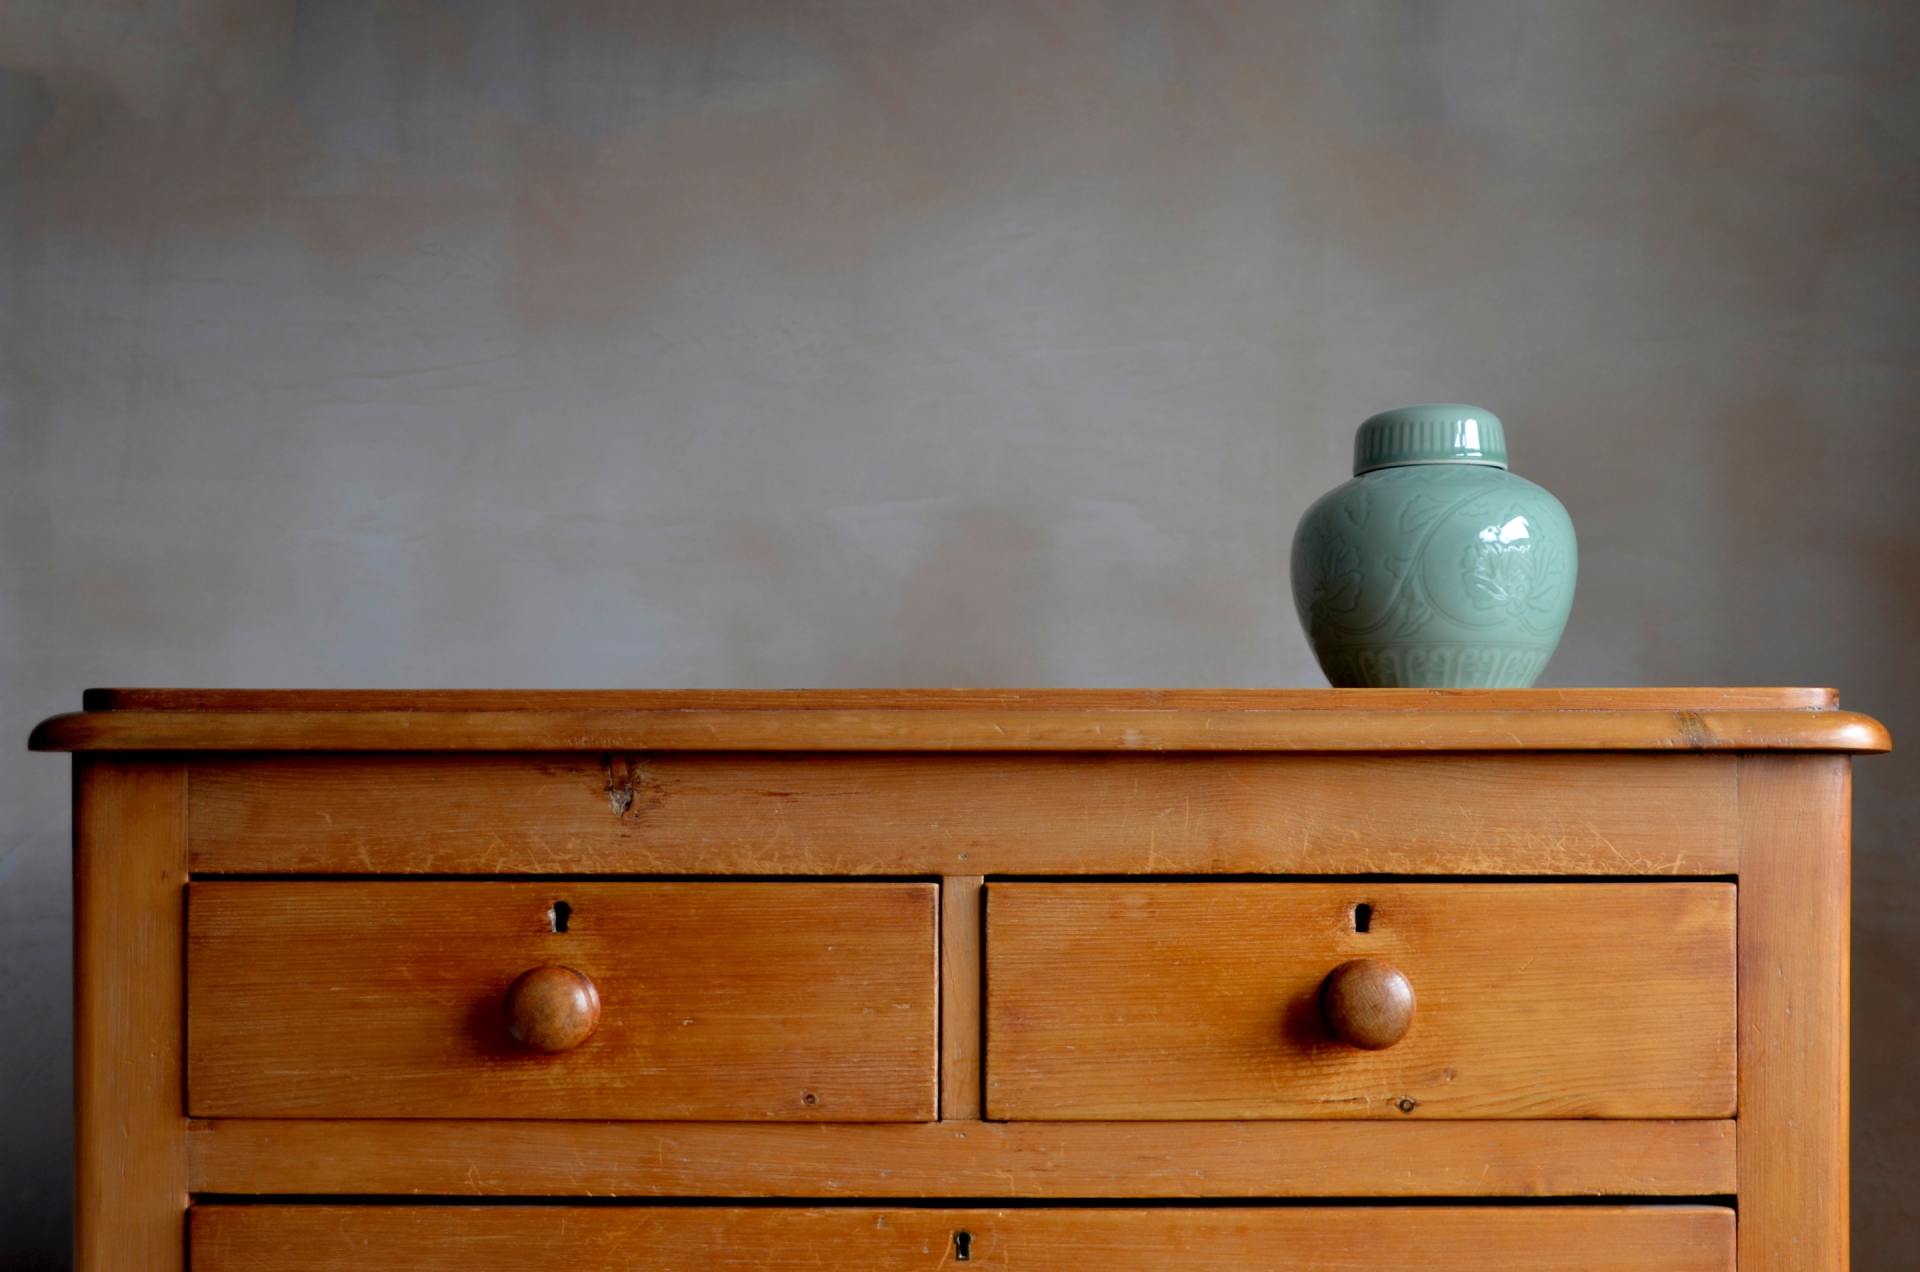 empty vase on dresser - what to consider when choosing cremation